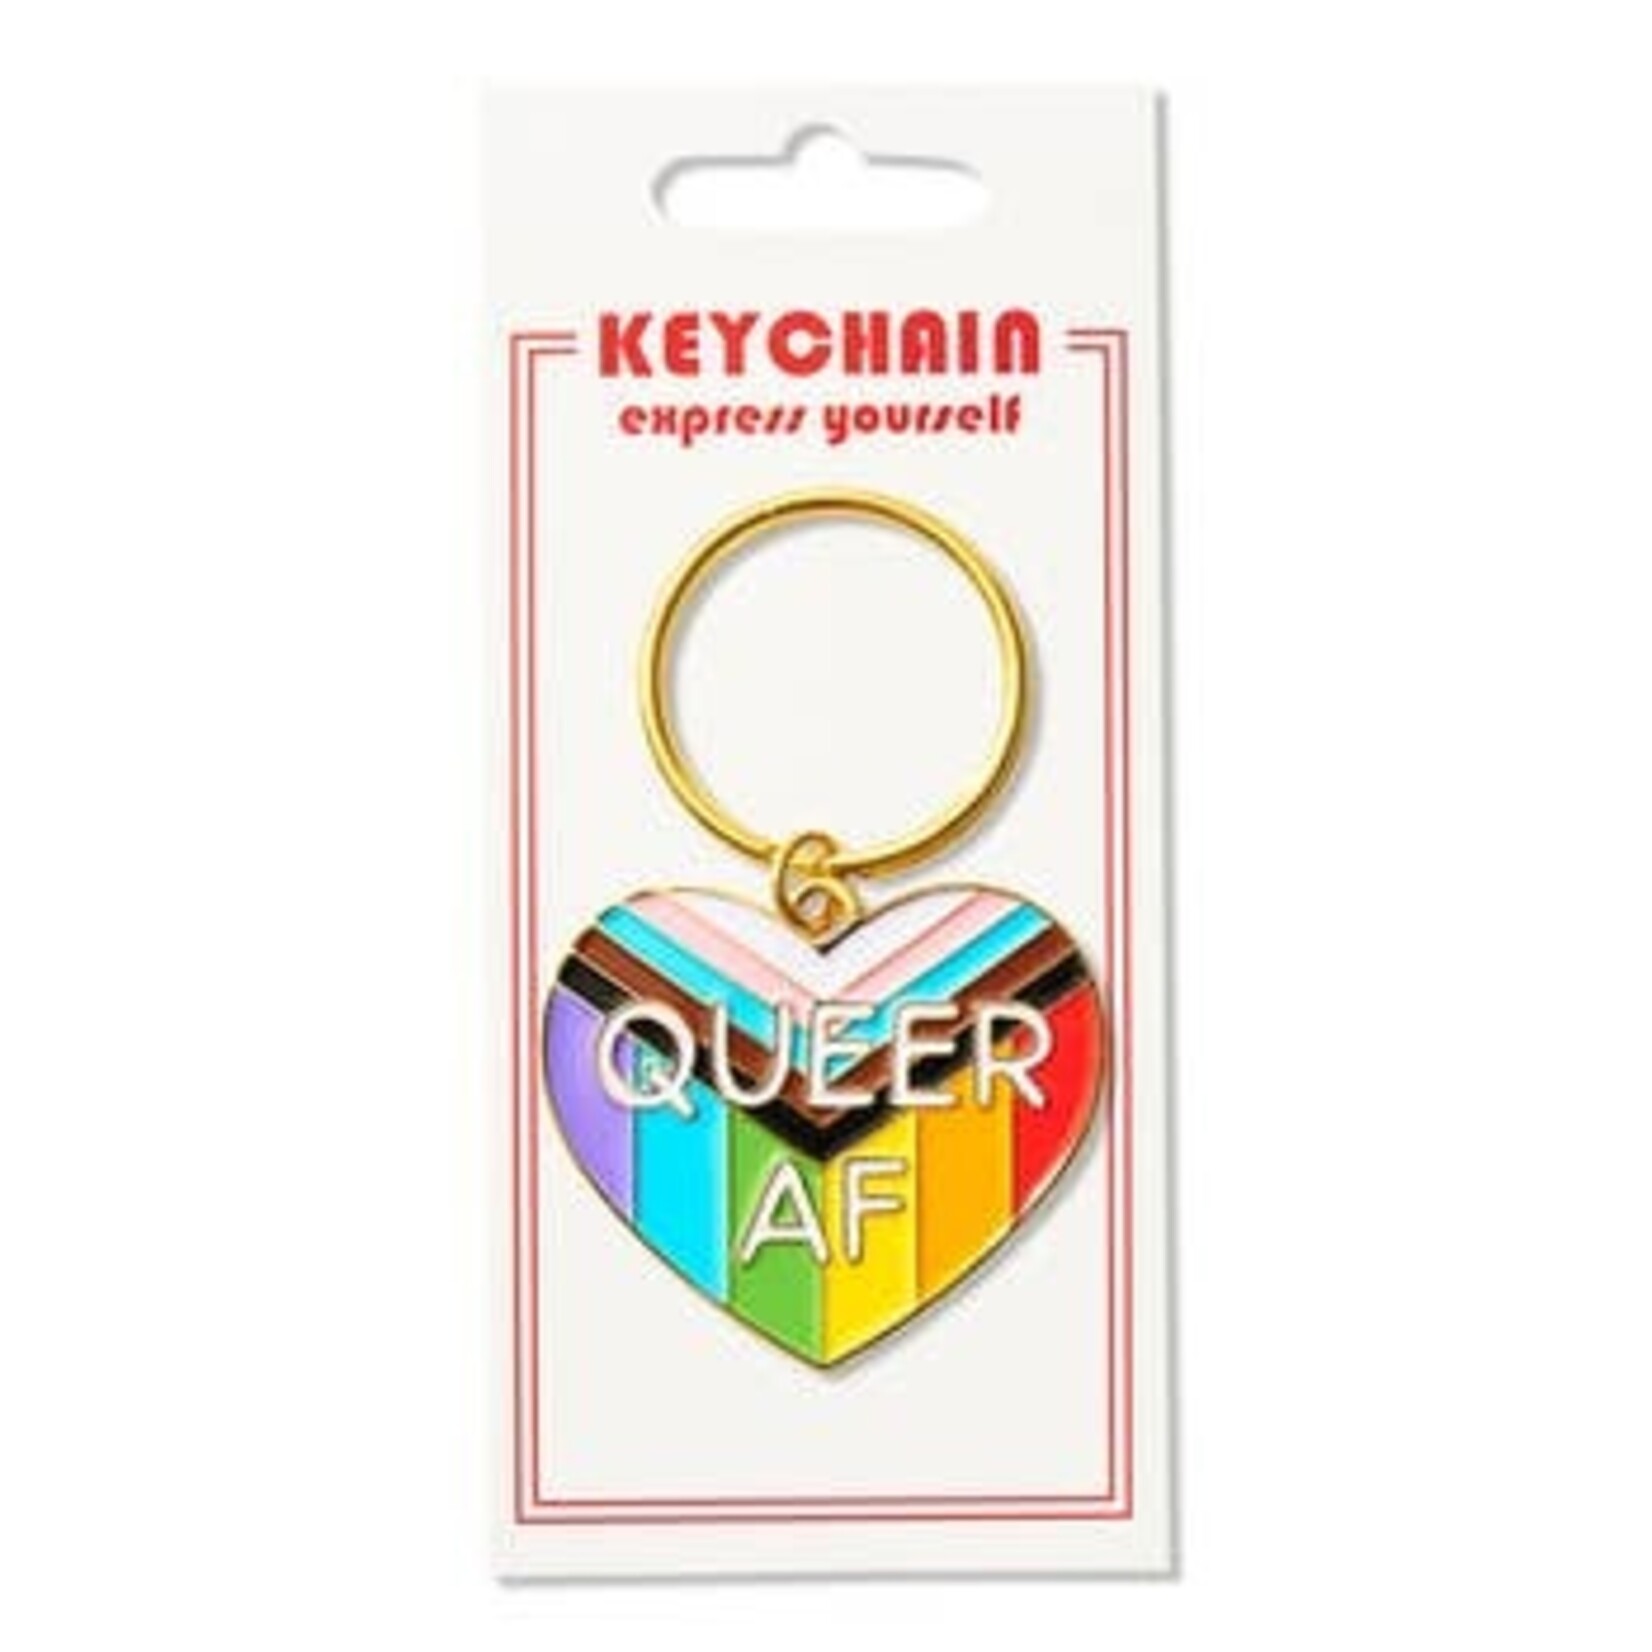 The Found Queer AF Enamel Keychain